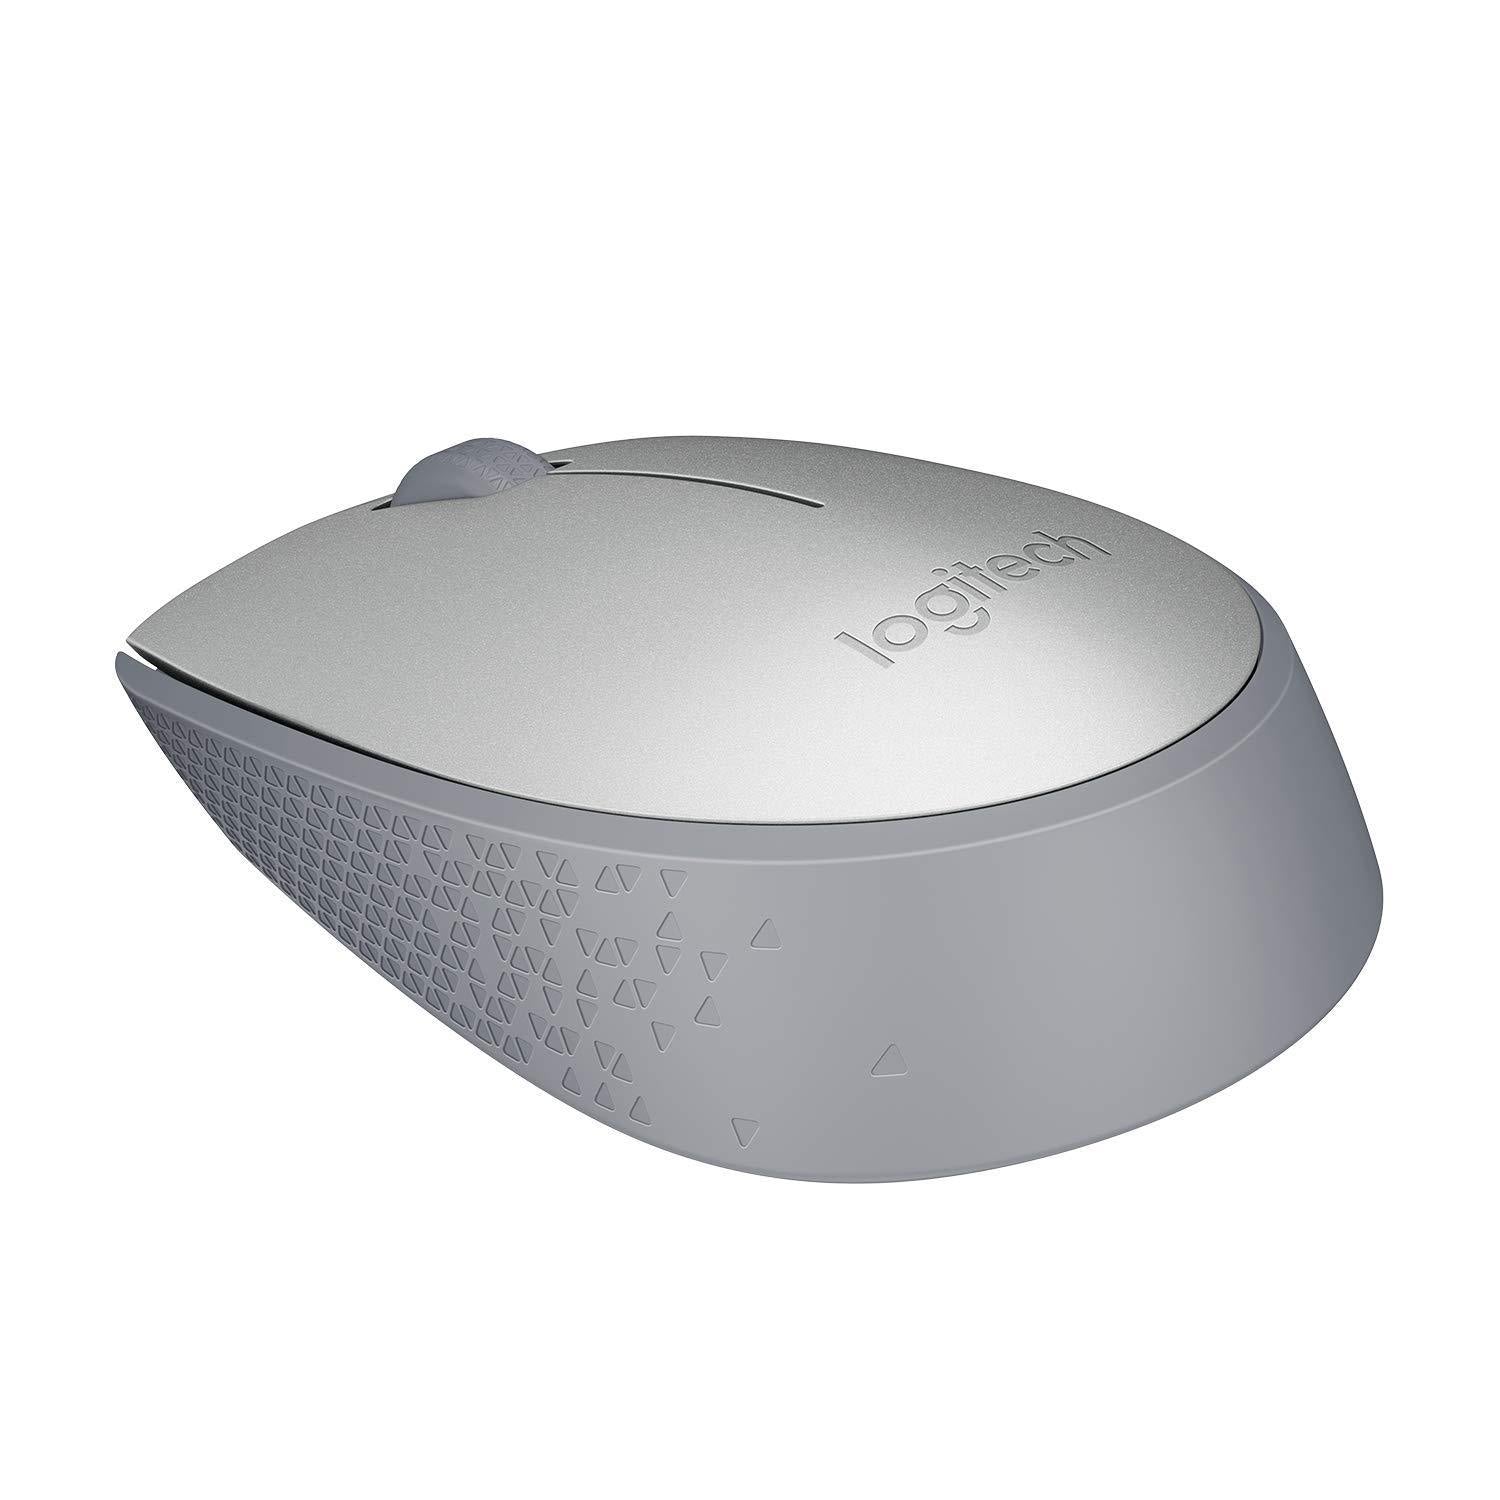 Mouse Logitech Wireless M170 Silver